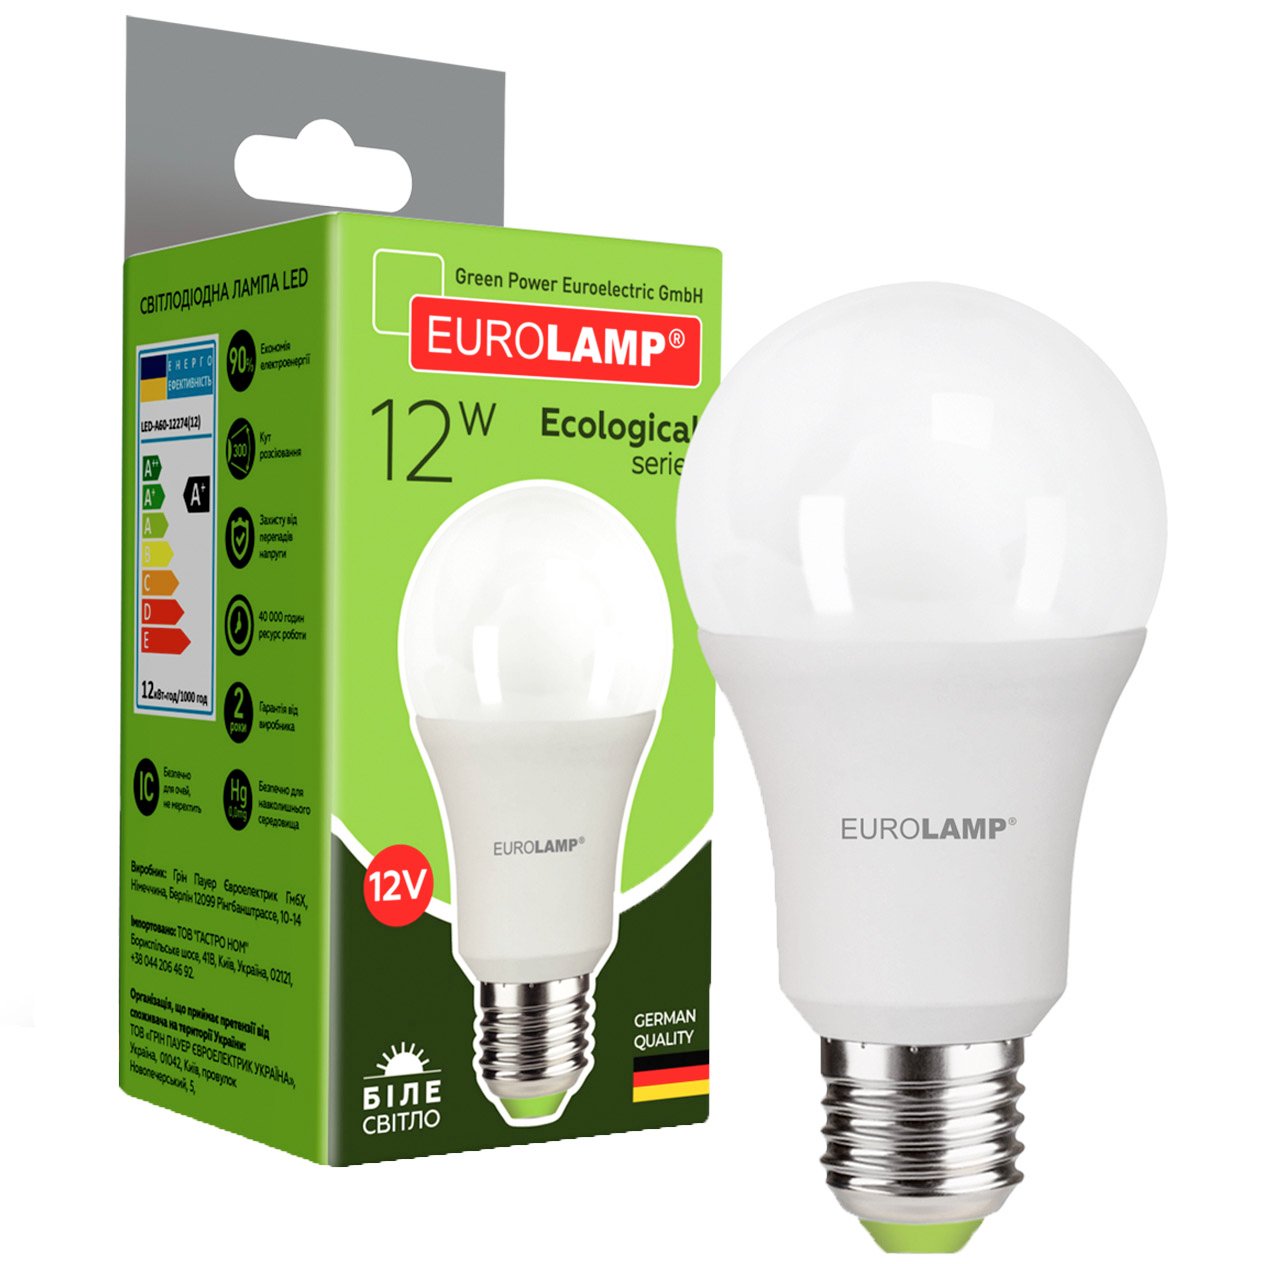 Светодиодная лампа Eurolamp LED Ecological Series низковольтная, A60, 12W, E27, 4000K, 12V (LED-A60-12274(12)) - фото 1